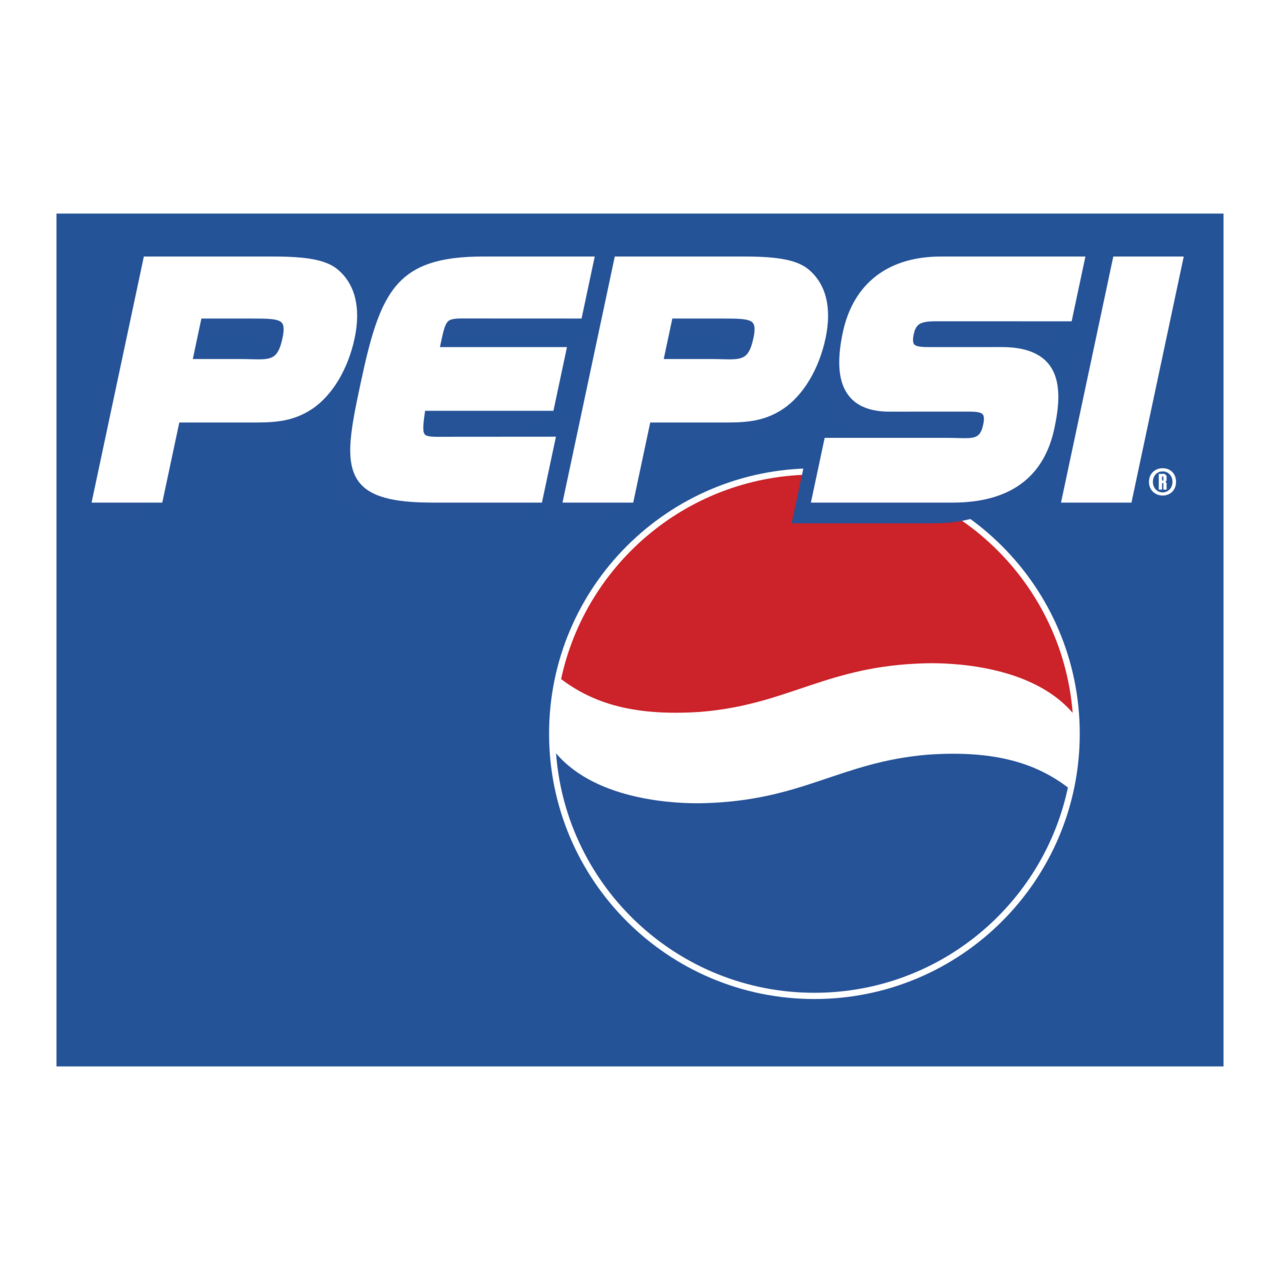 Pepsi Logo PNG HD Image - PNG All